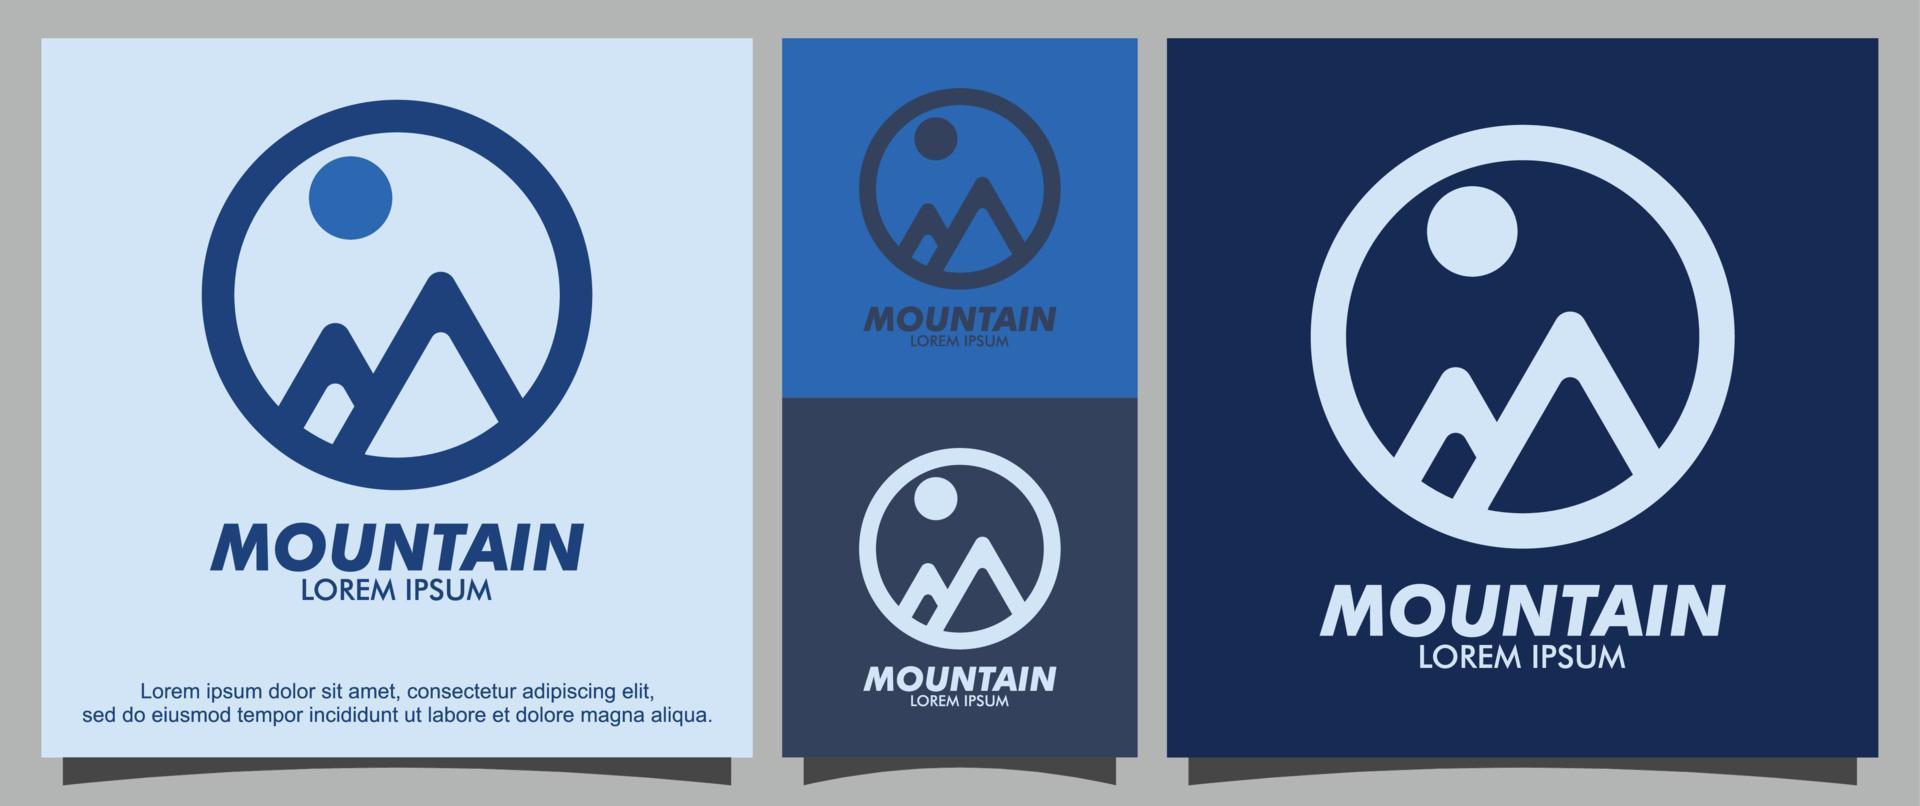 modelo de design de logotipo de montanha simples vetor